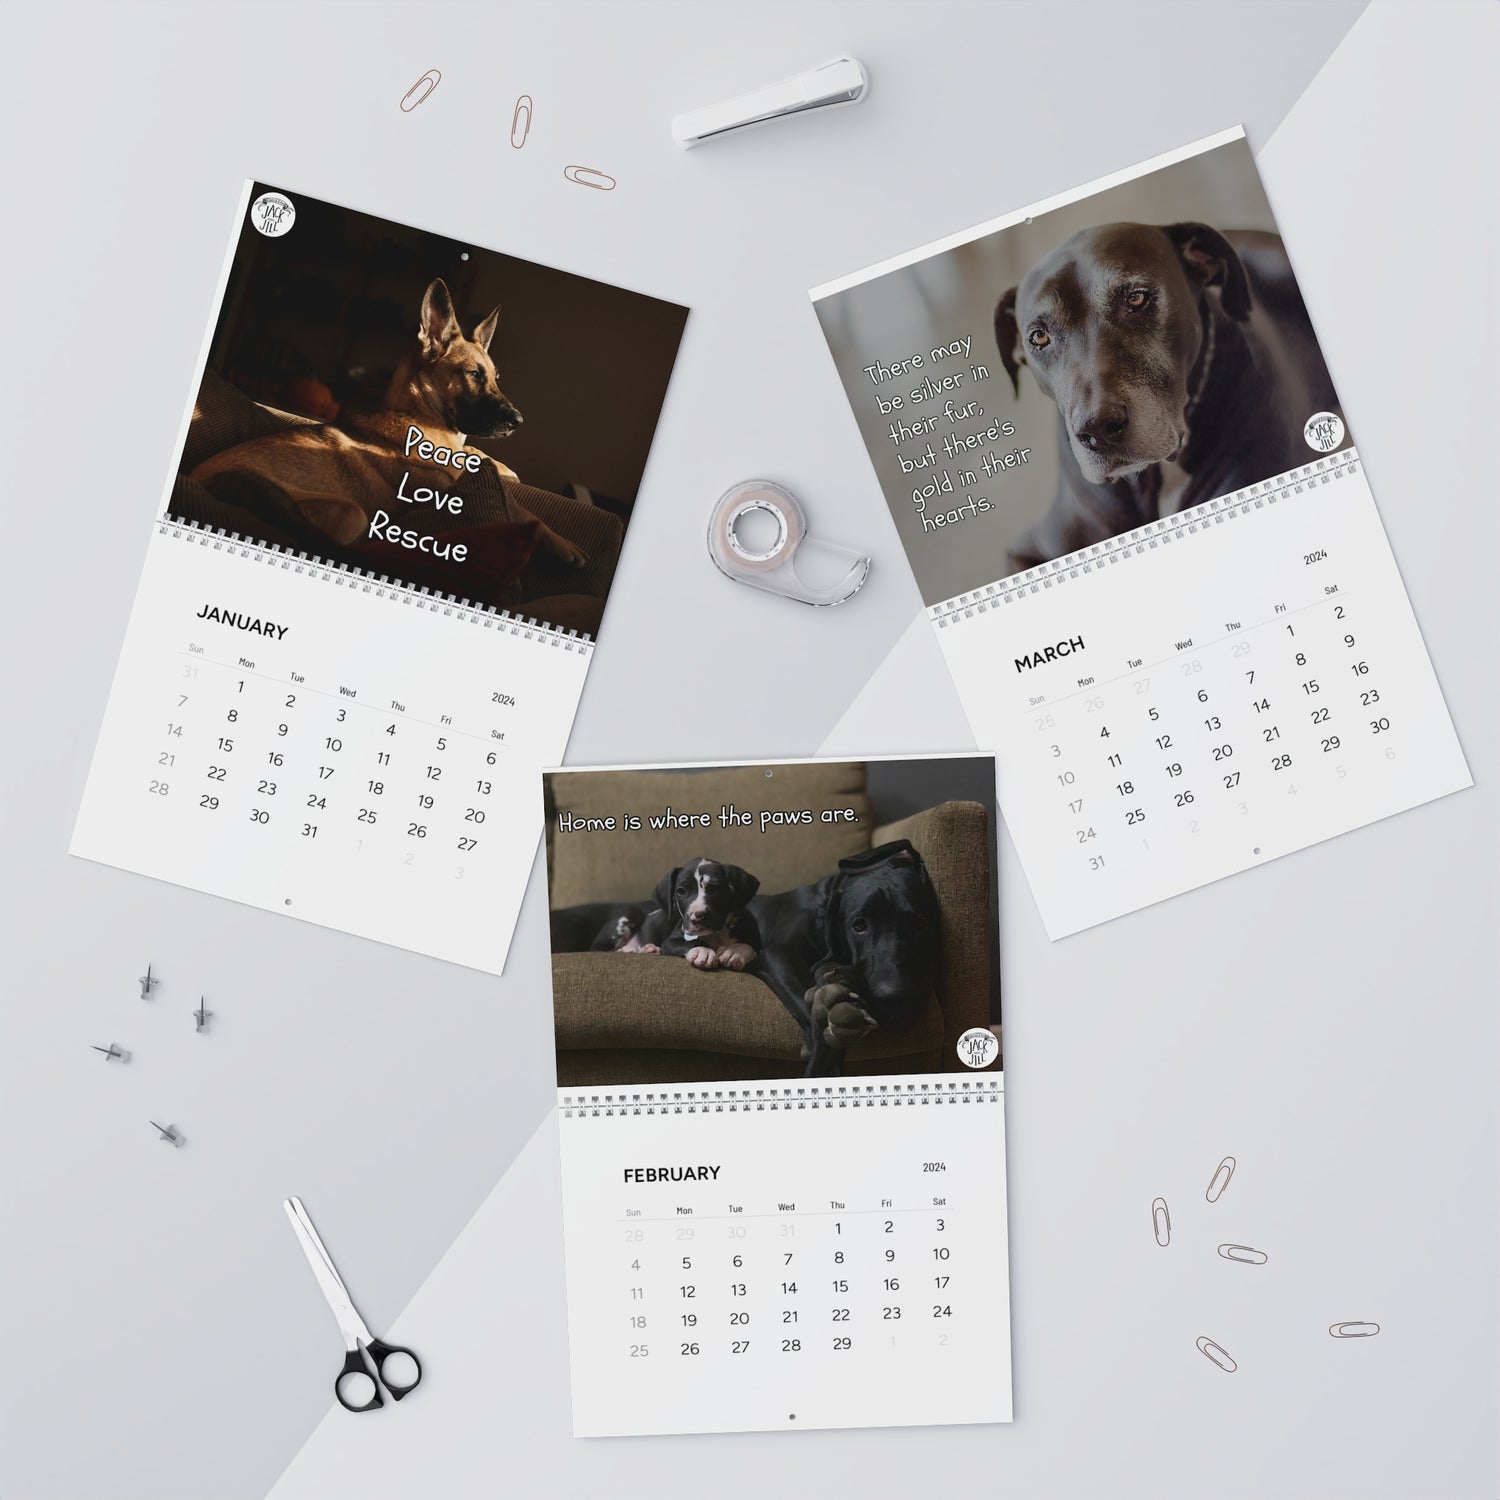 Rescuing Jack and Jill - Big Dog Lovers! 2024 Calendar Rescuing Jack and Jill